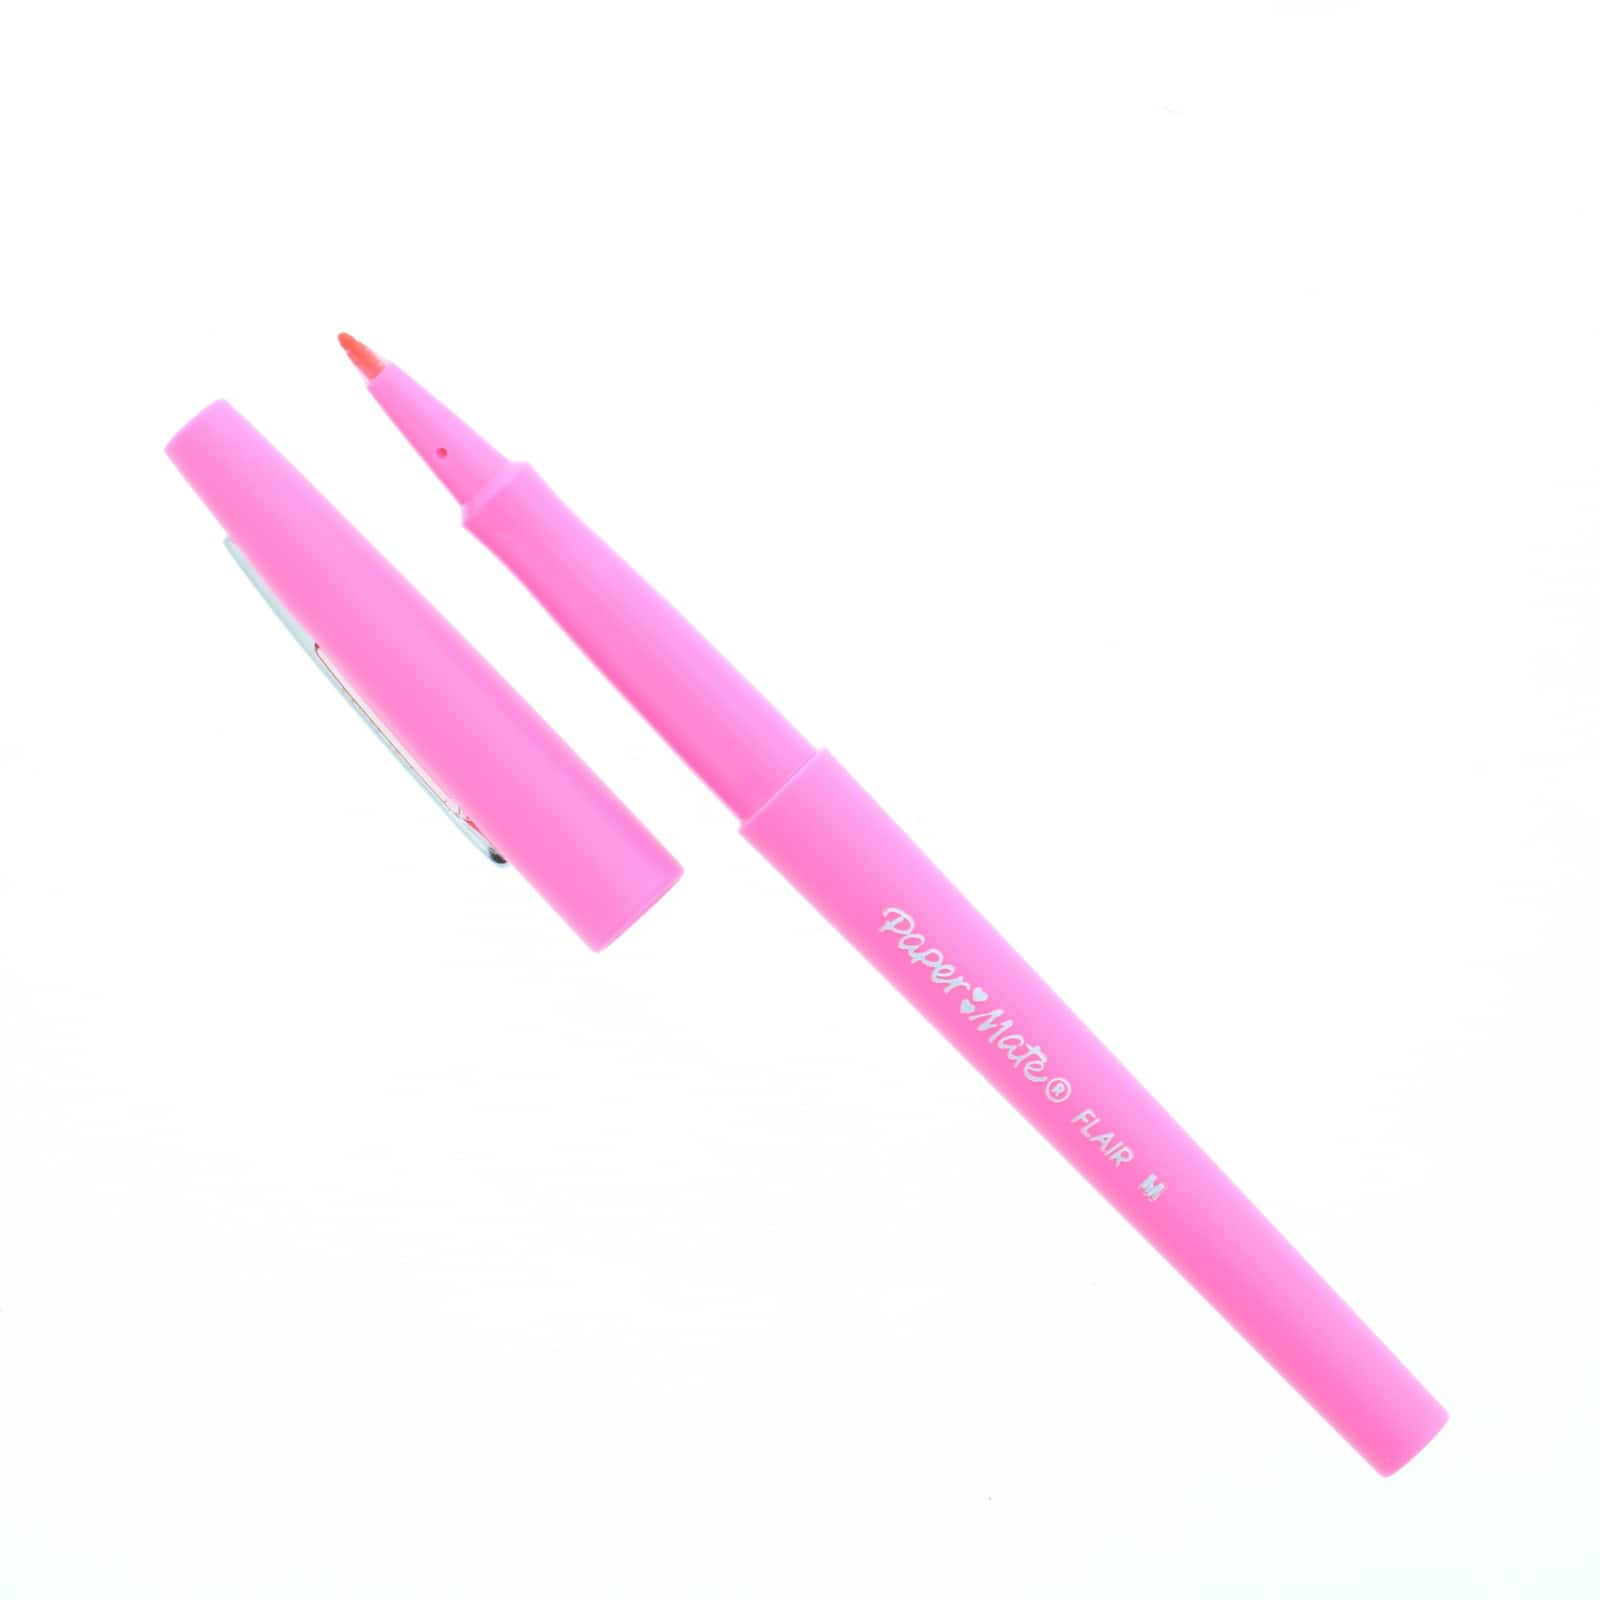 Paper Mate Flair Pink Felt Tip Pen Medium Original